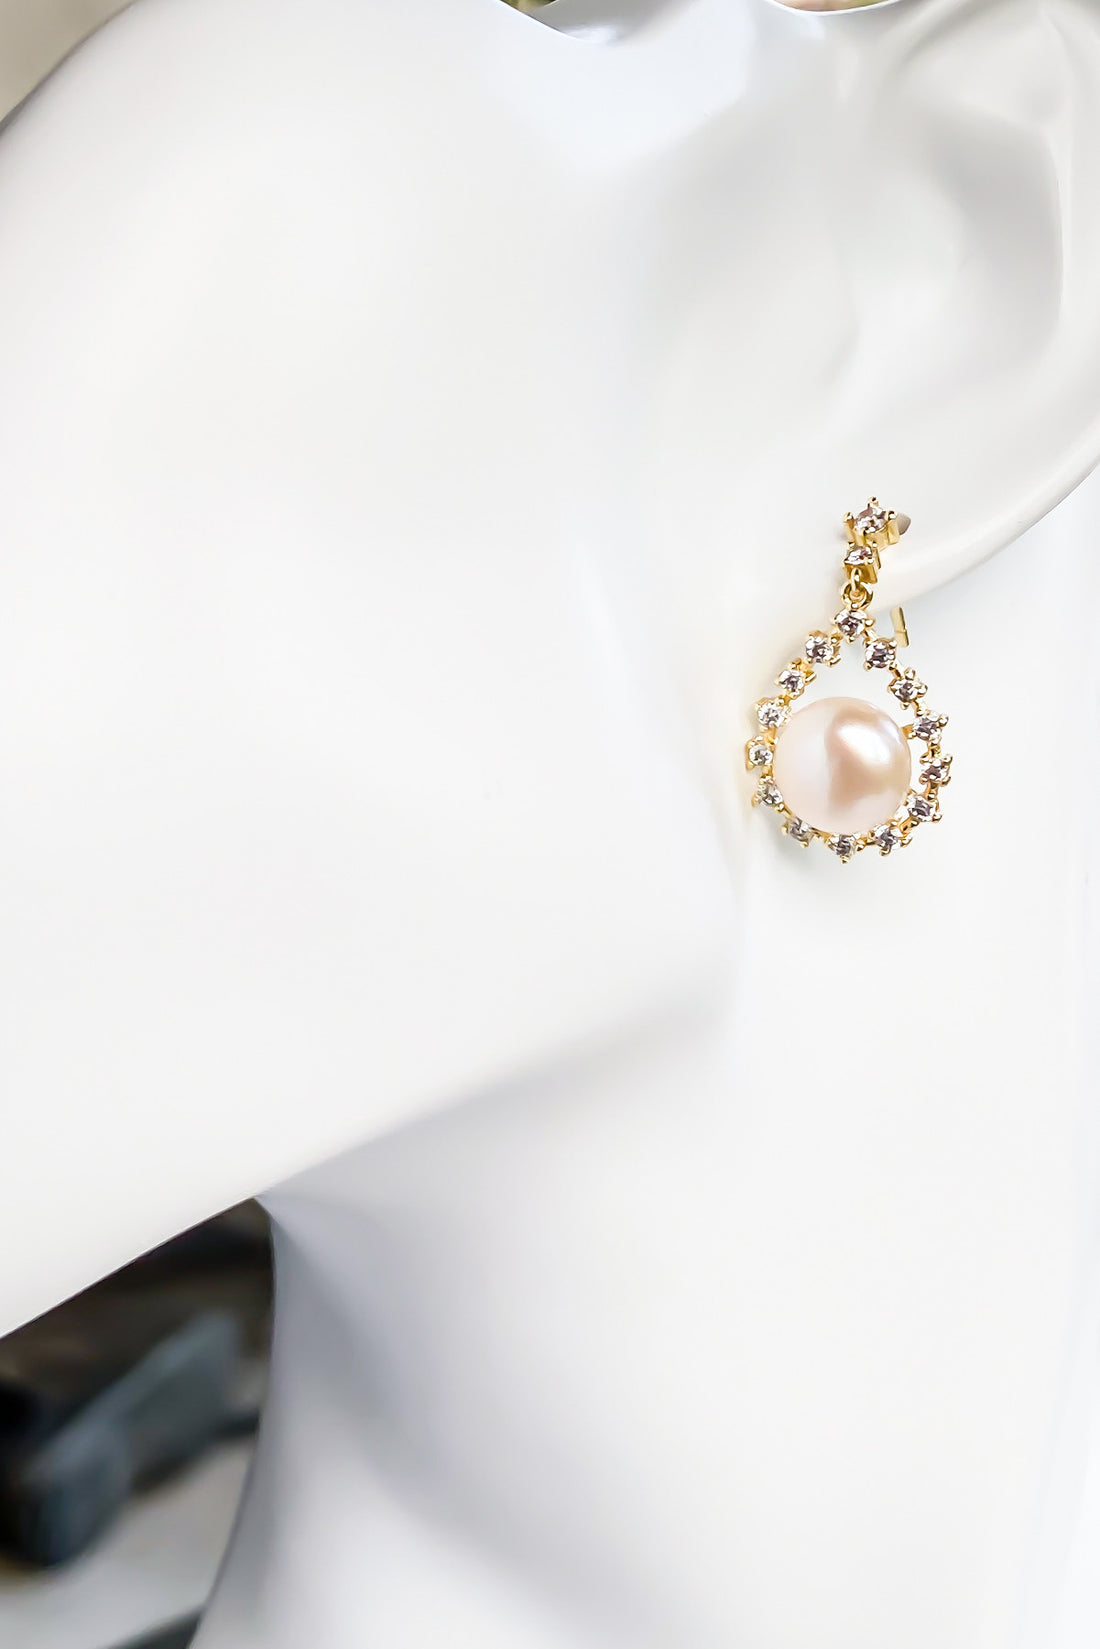 SKYE San Francisco Shop SF Chic Modern Elegant Classy Women Jewelry French Parisian Minimalist Amie 18K Gold Freshwater Pearl Crystal Earrings 5